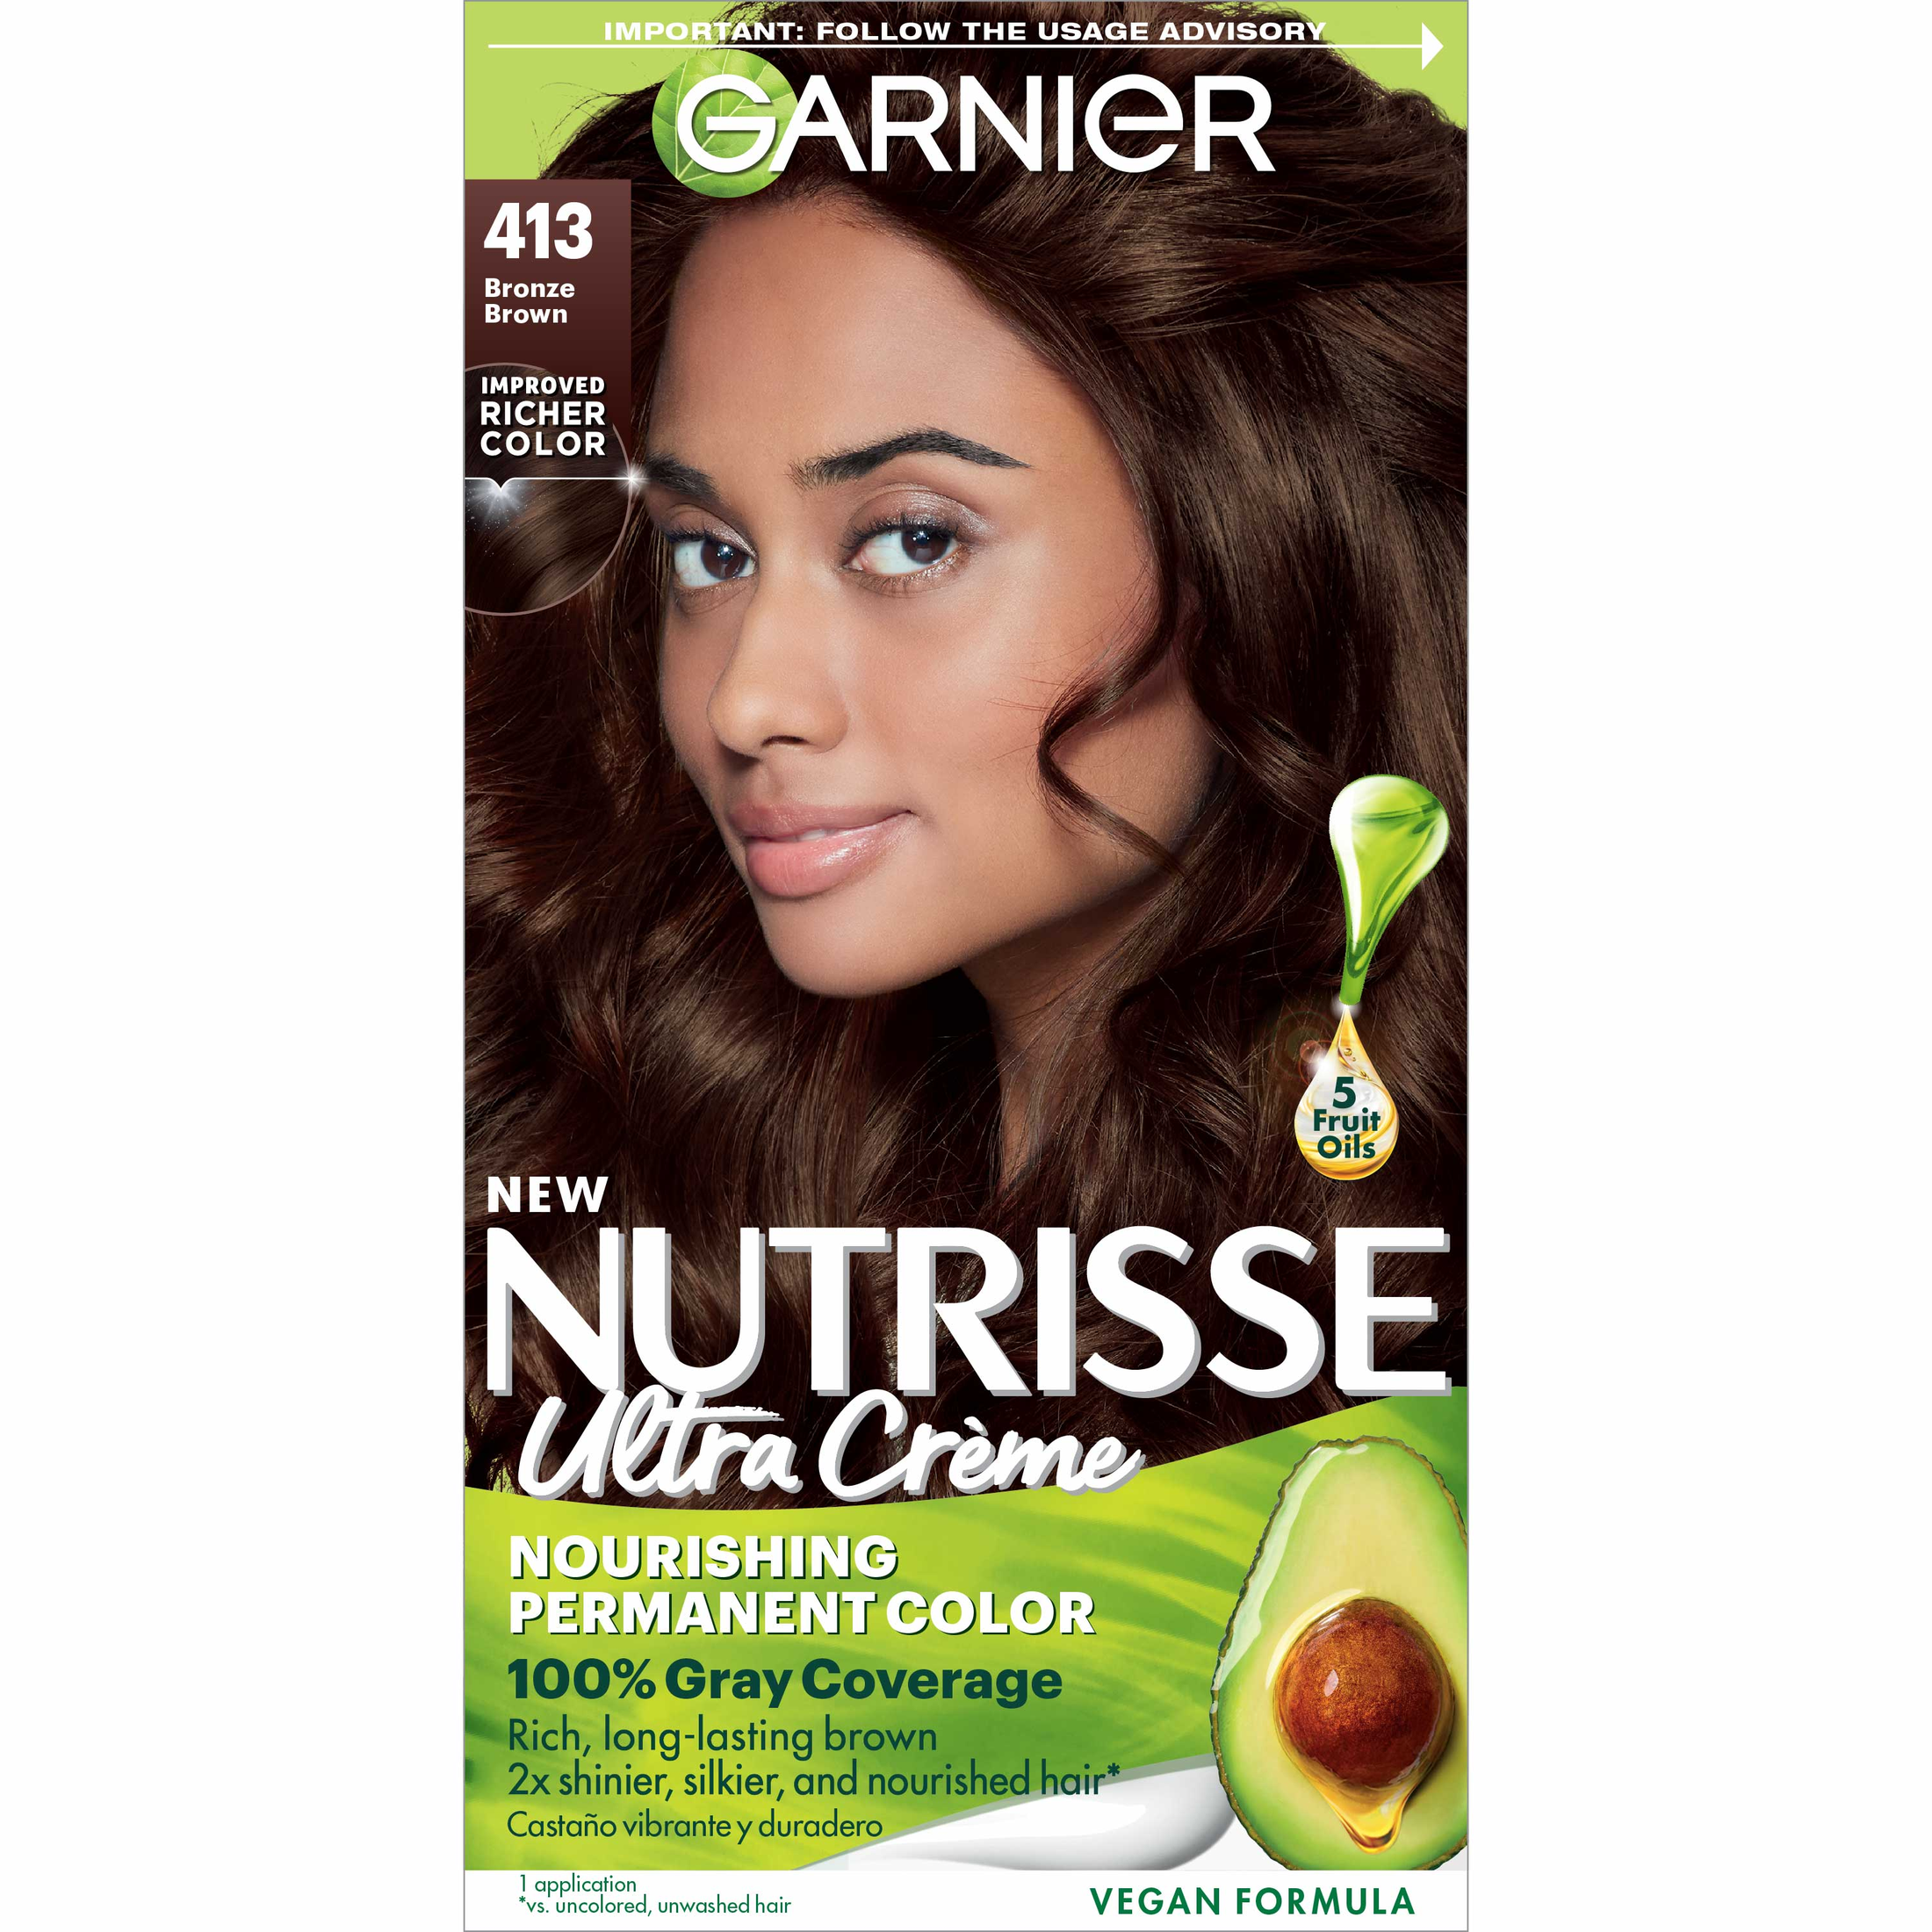 Garnier Nutrisse Nourishing Hair Color Creme, 413 Bronze Brown - image 1 of 11